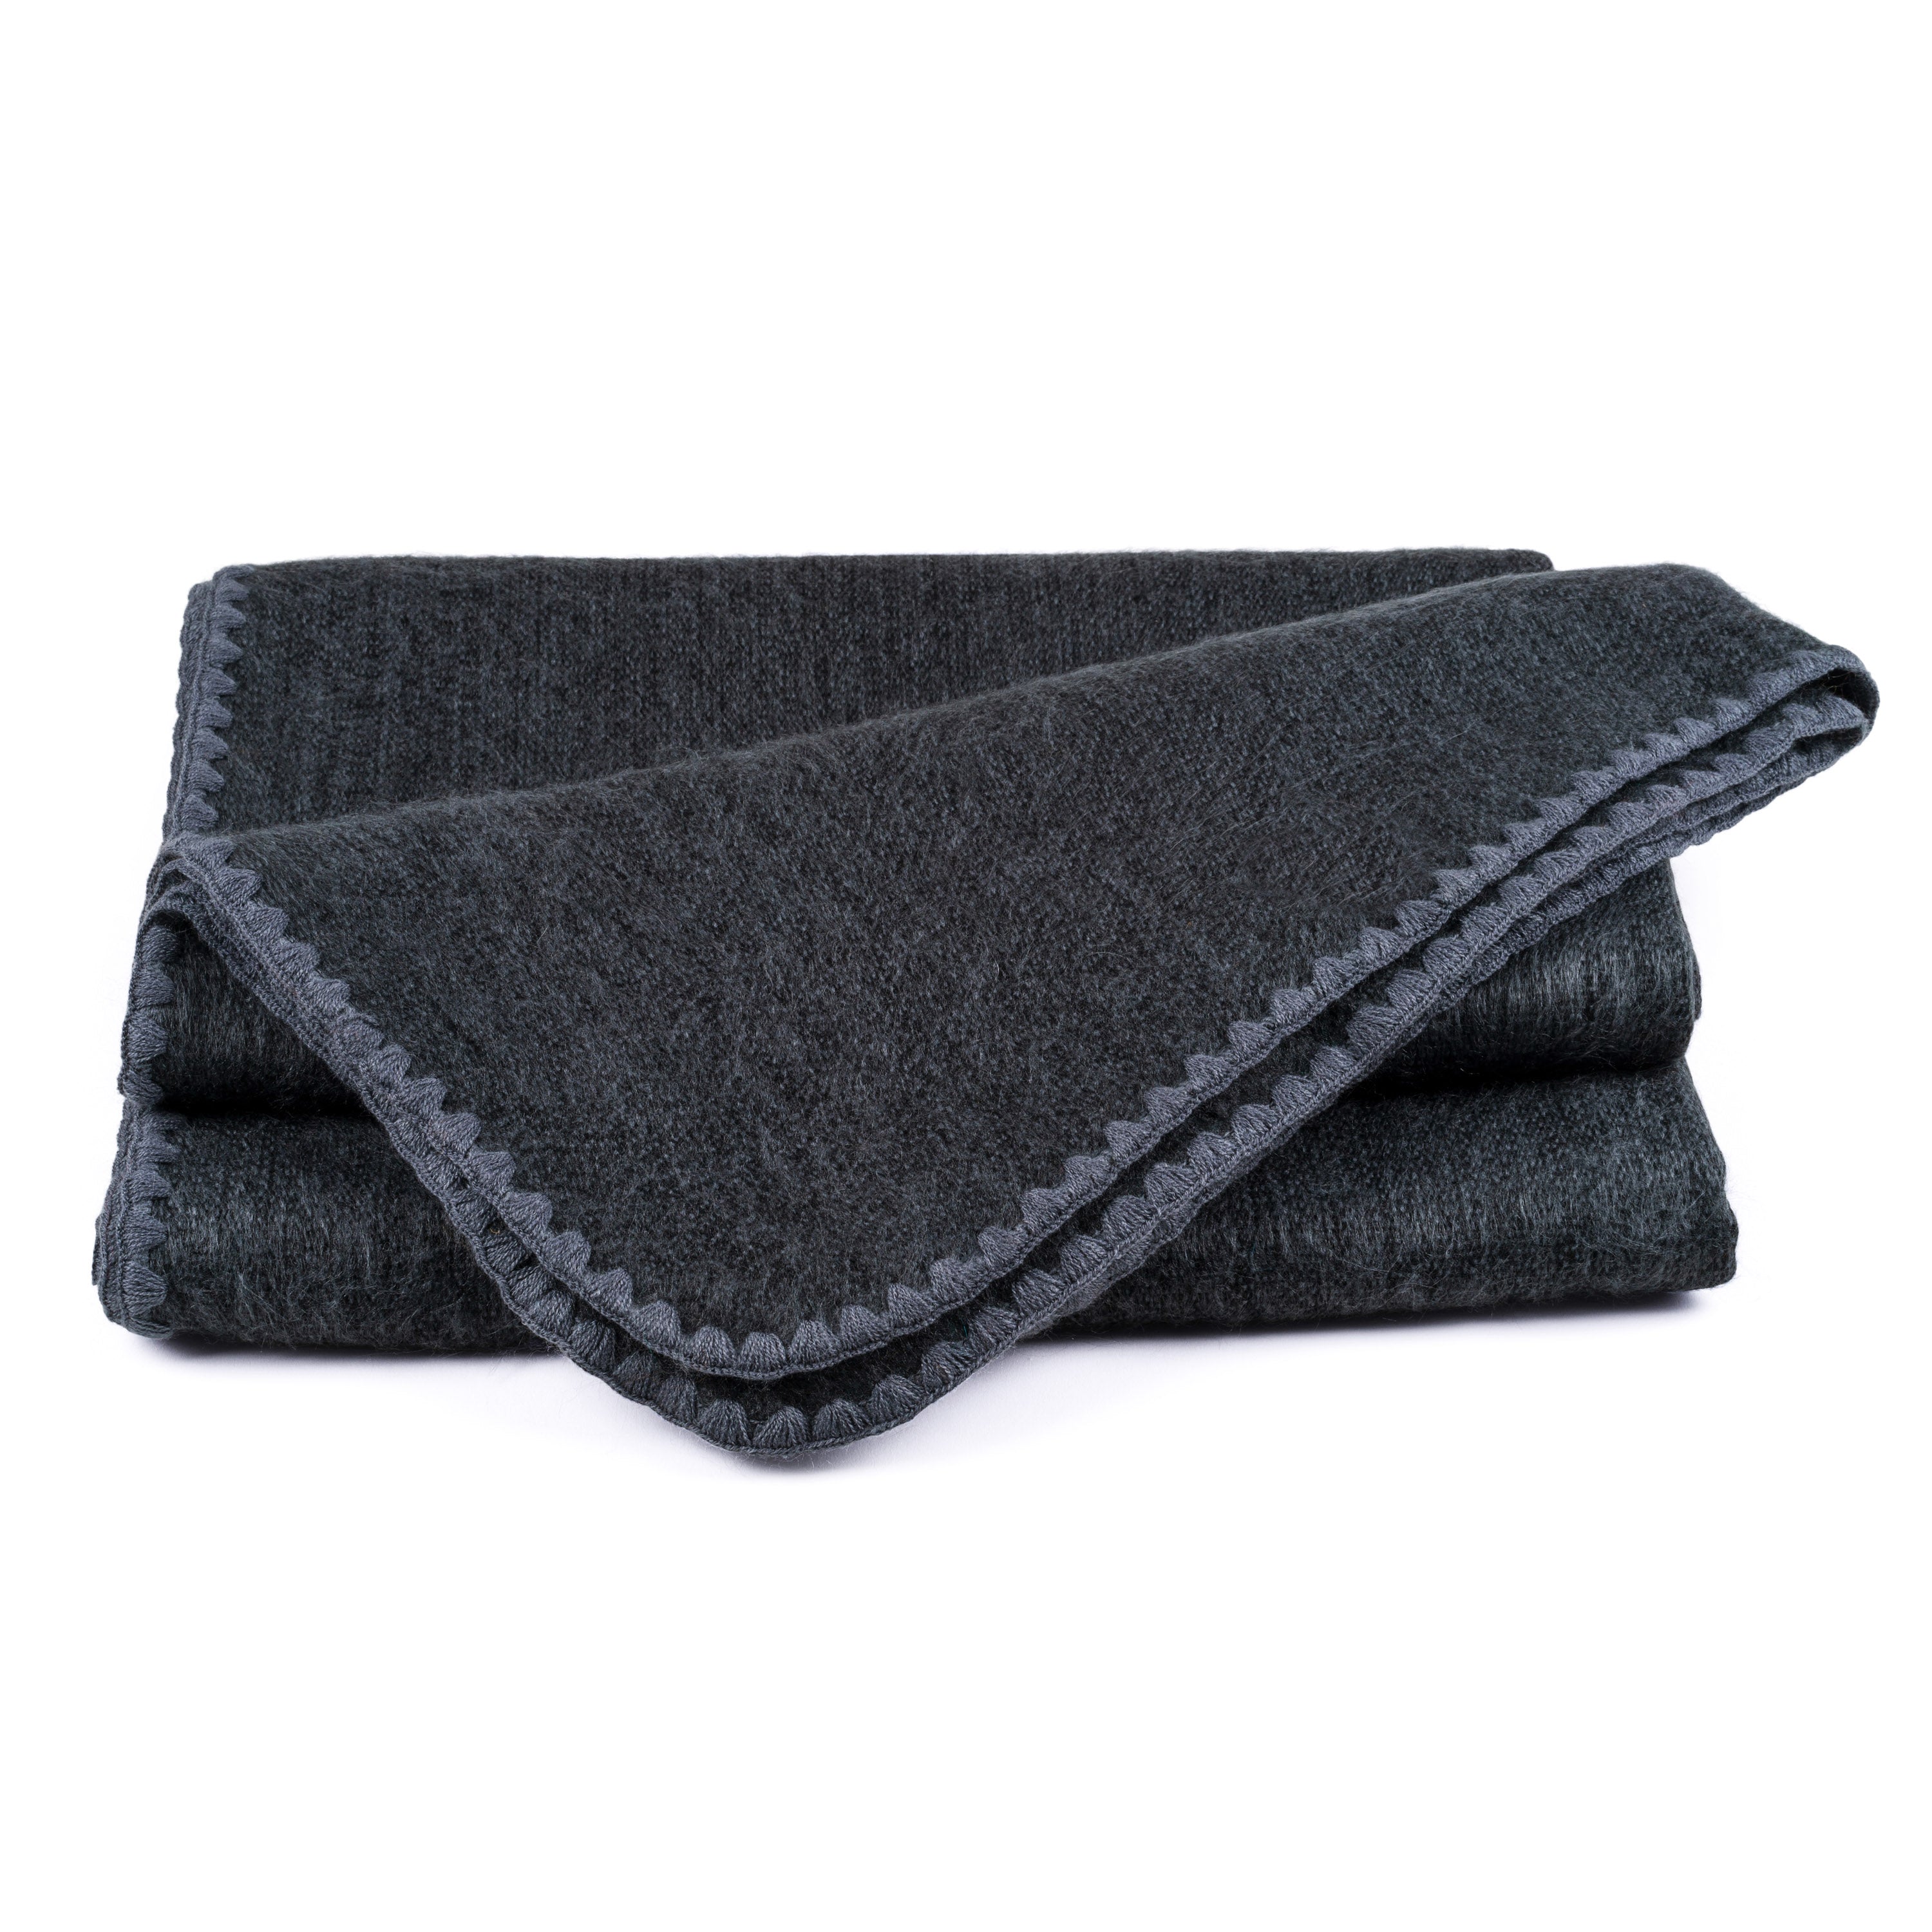 QISU Alpaca Wool Throw Blanket - Solid Styled Blankets - QISU